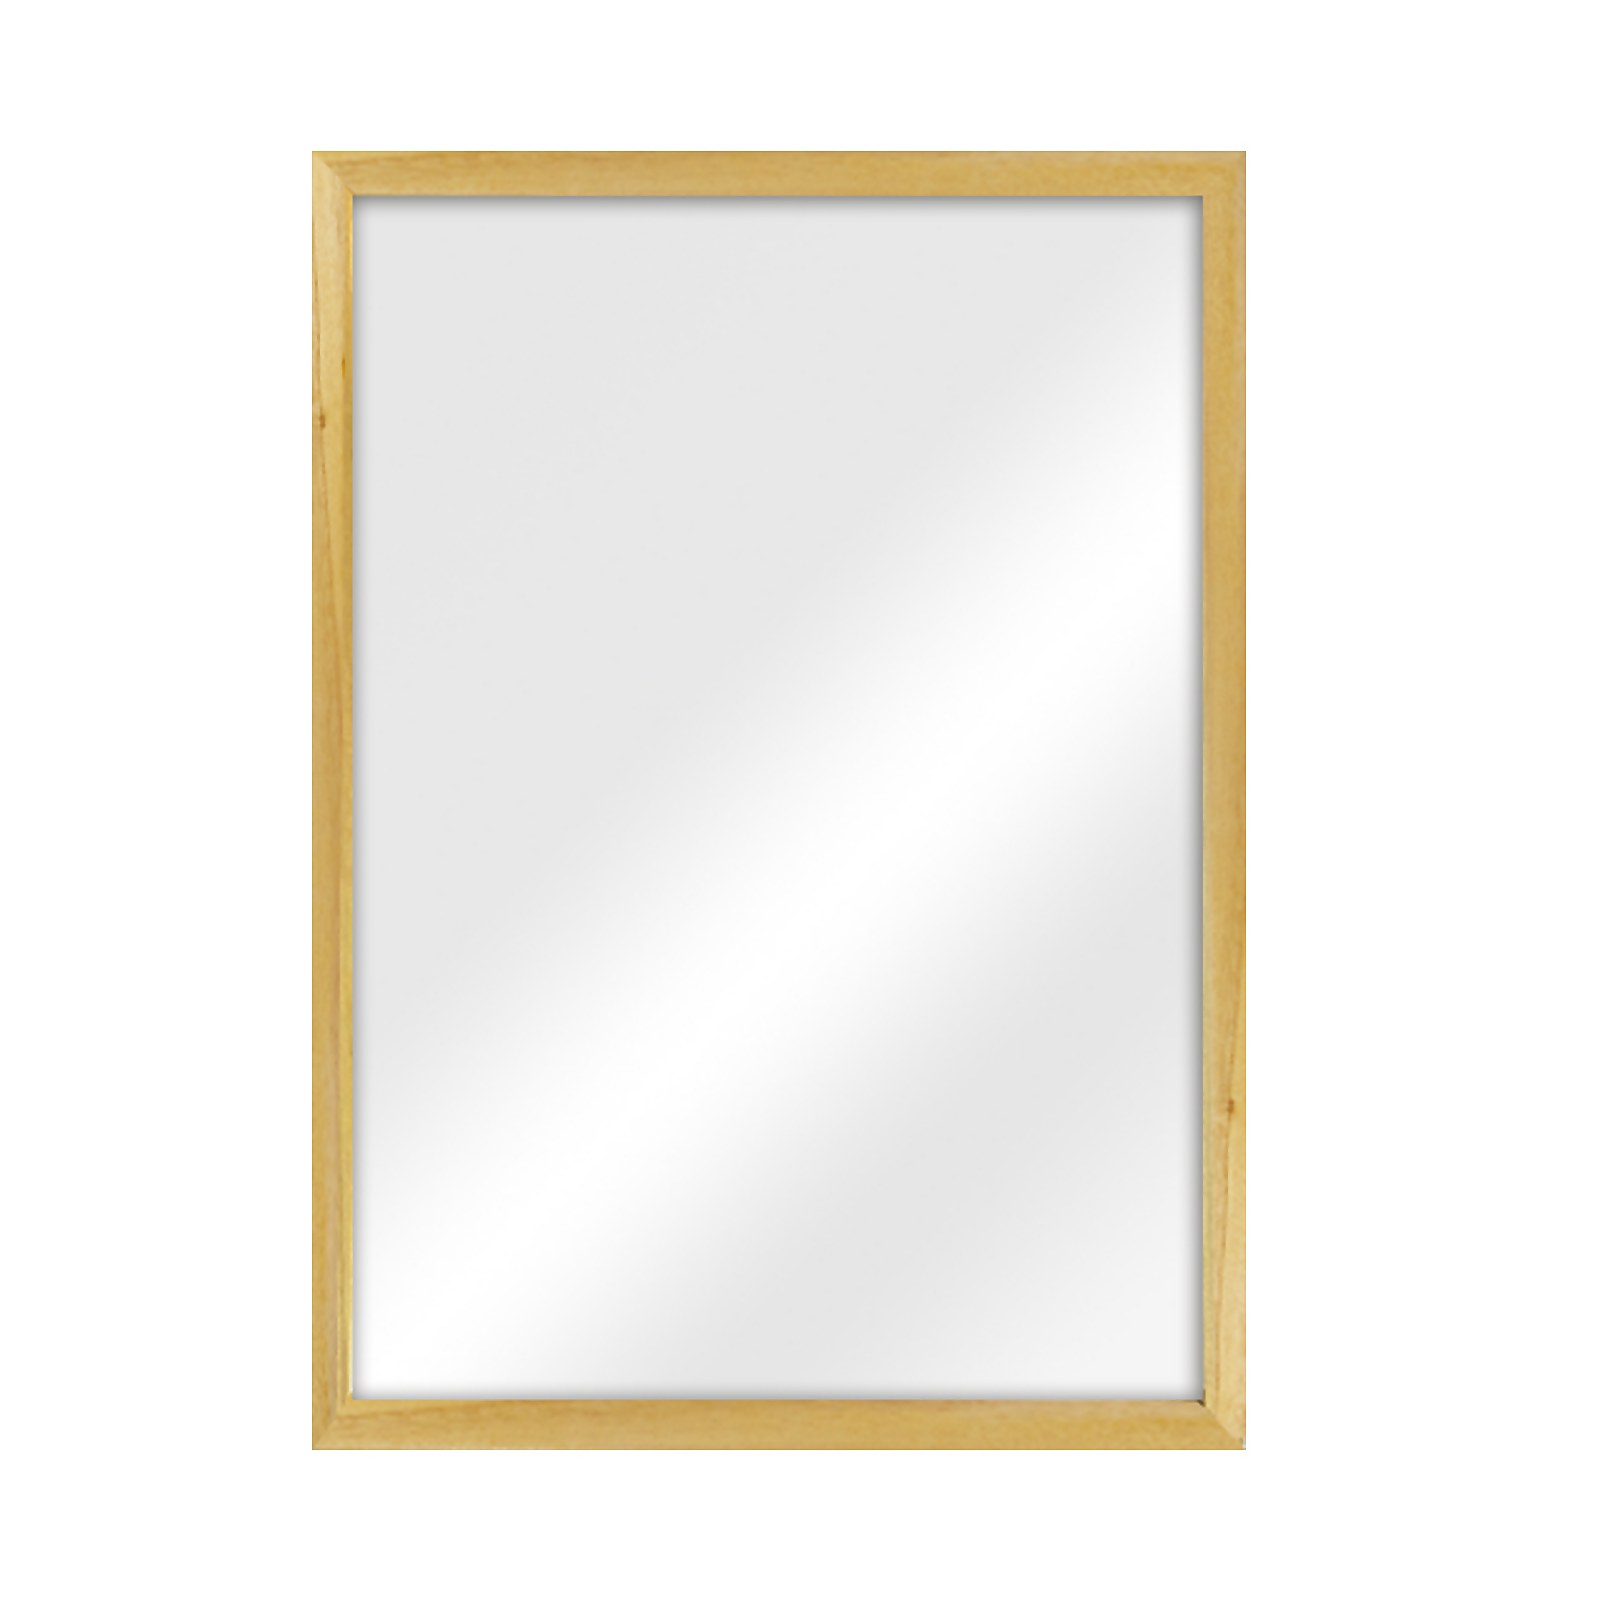 Photo of Wooden Frame Mirror - 70x100cm